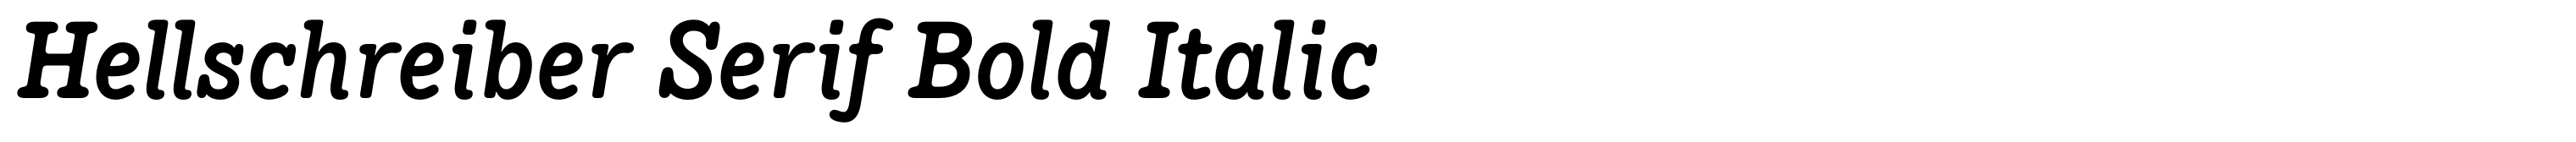 Hellschreiber Serif Bold Italic